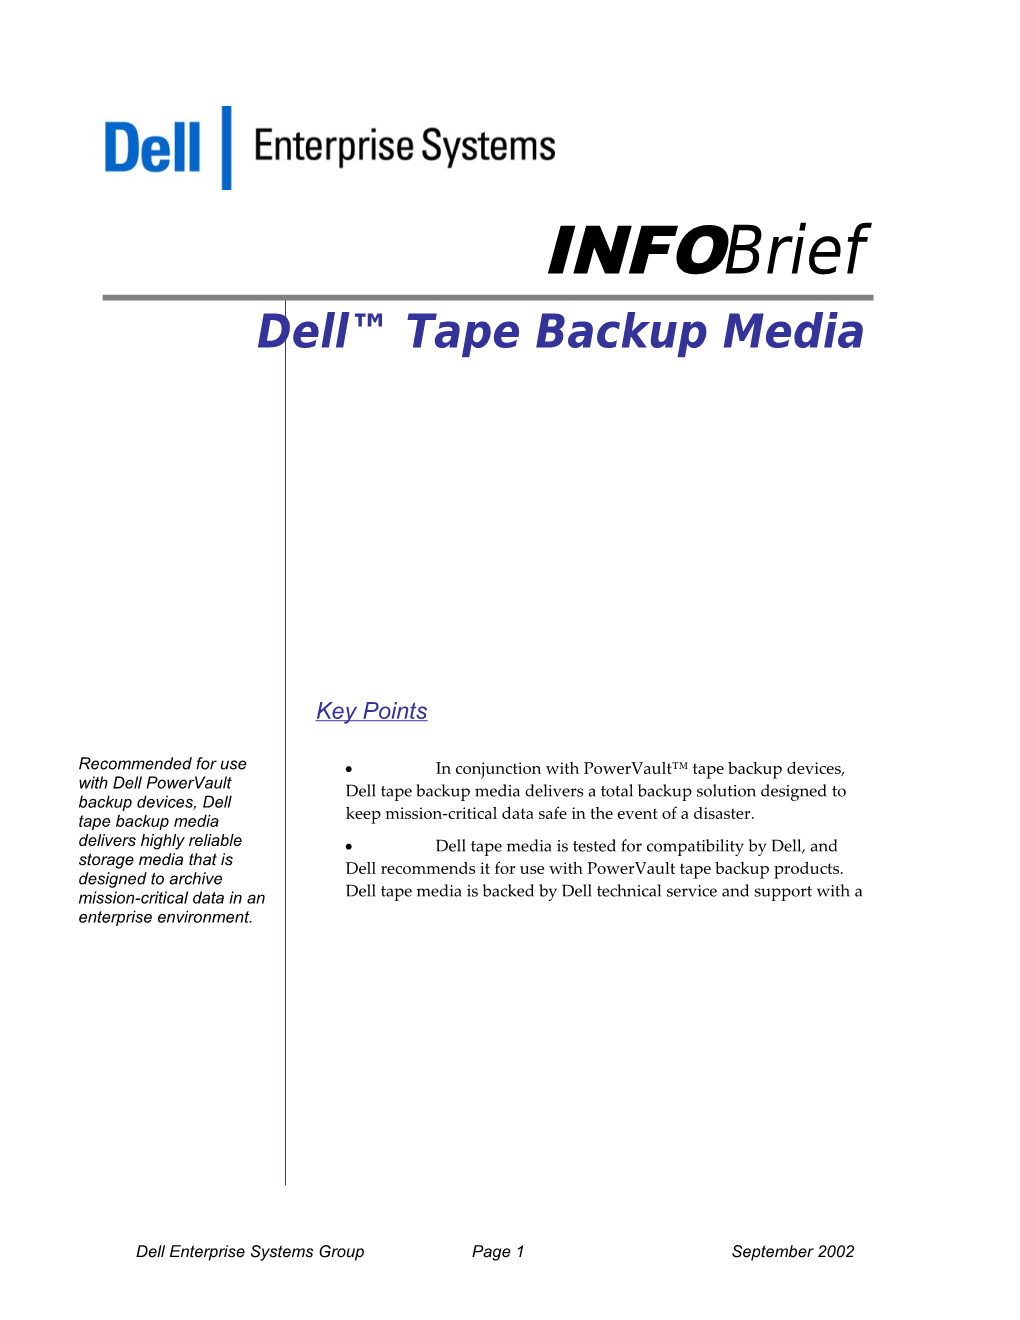 Dell Tape Backup Media Infobrief